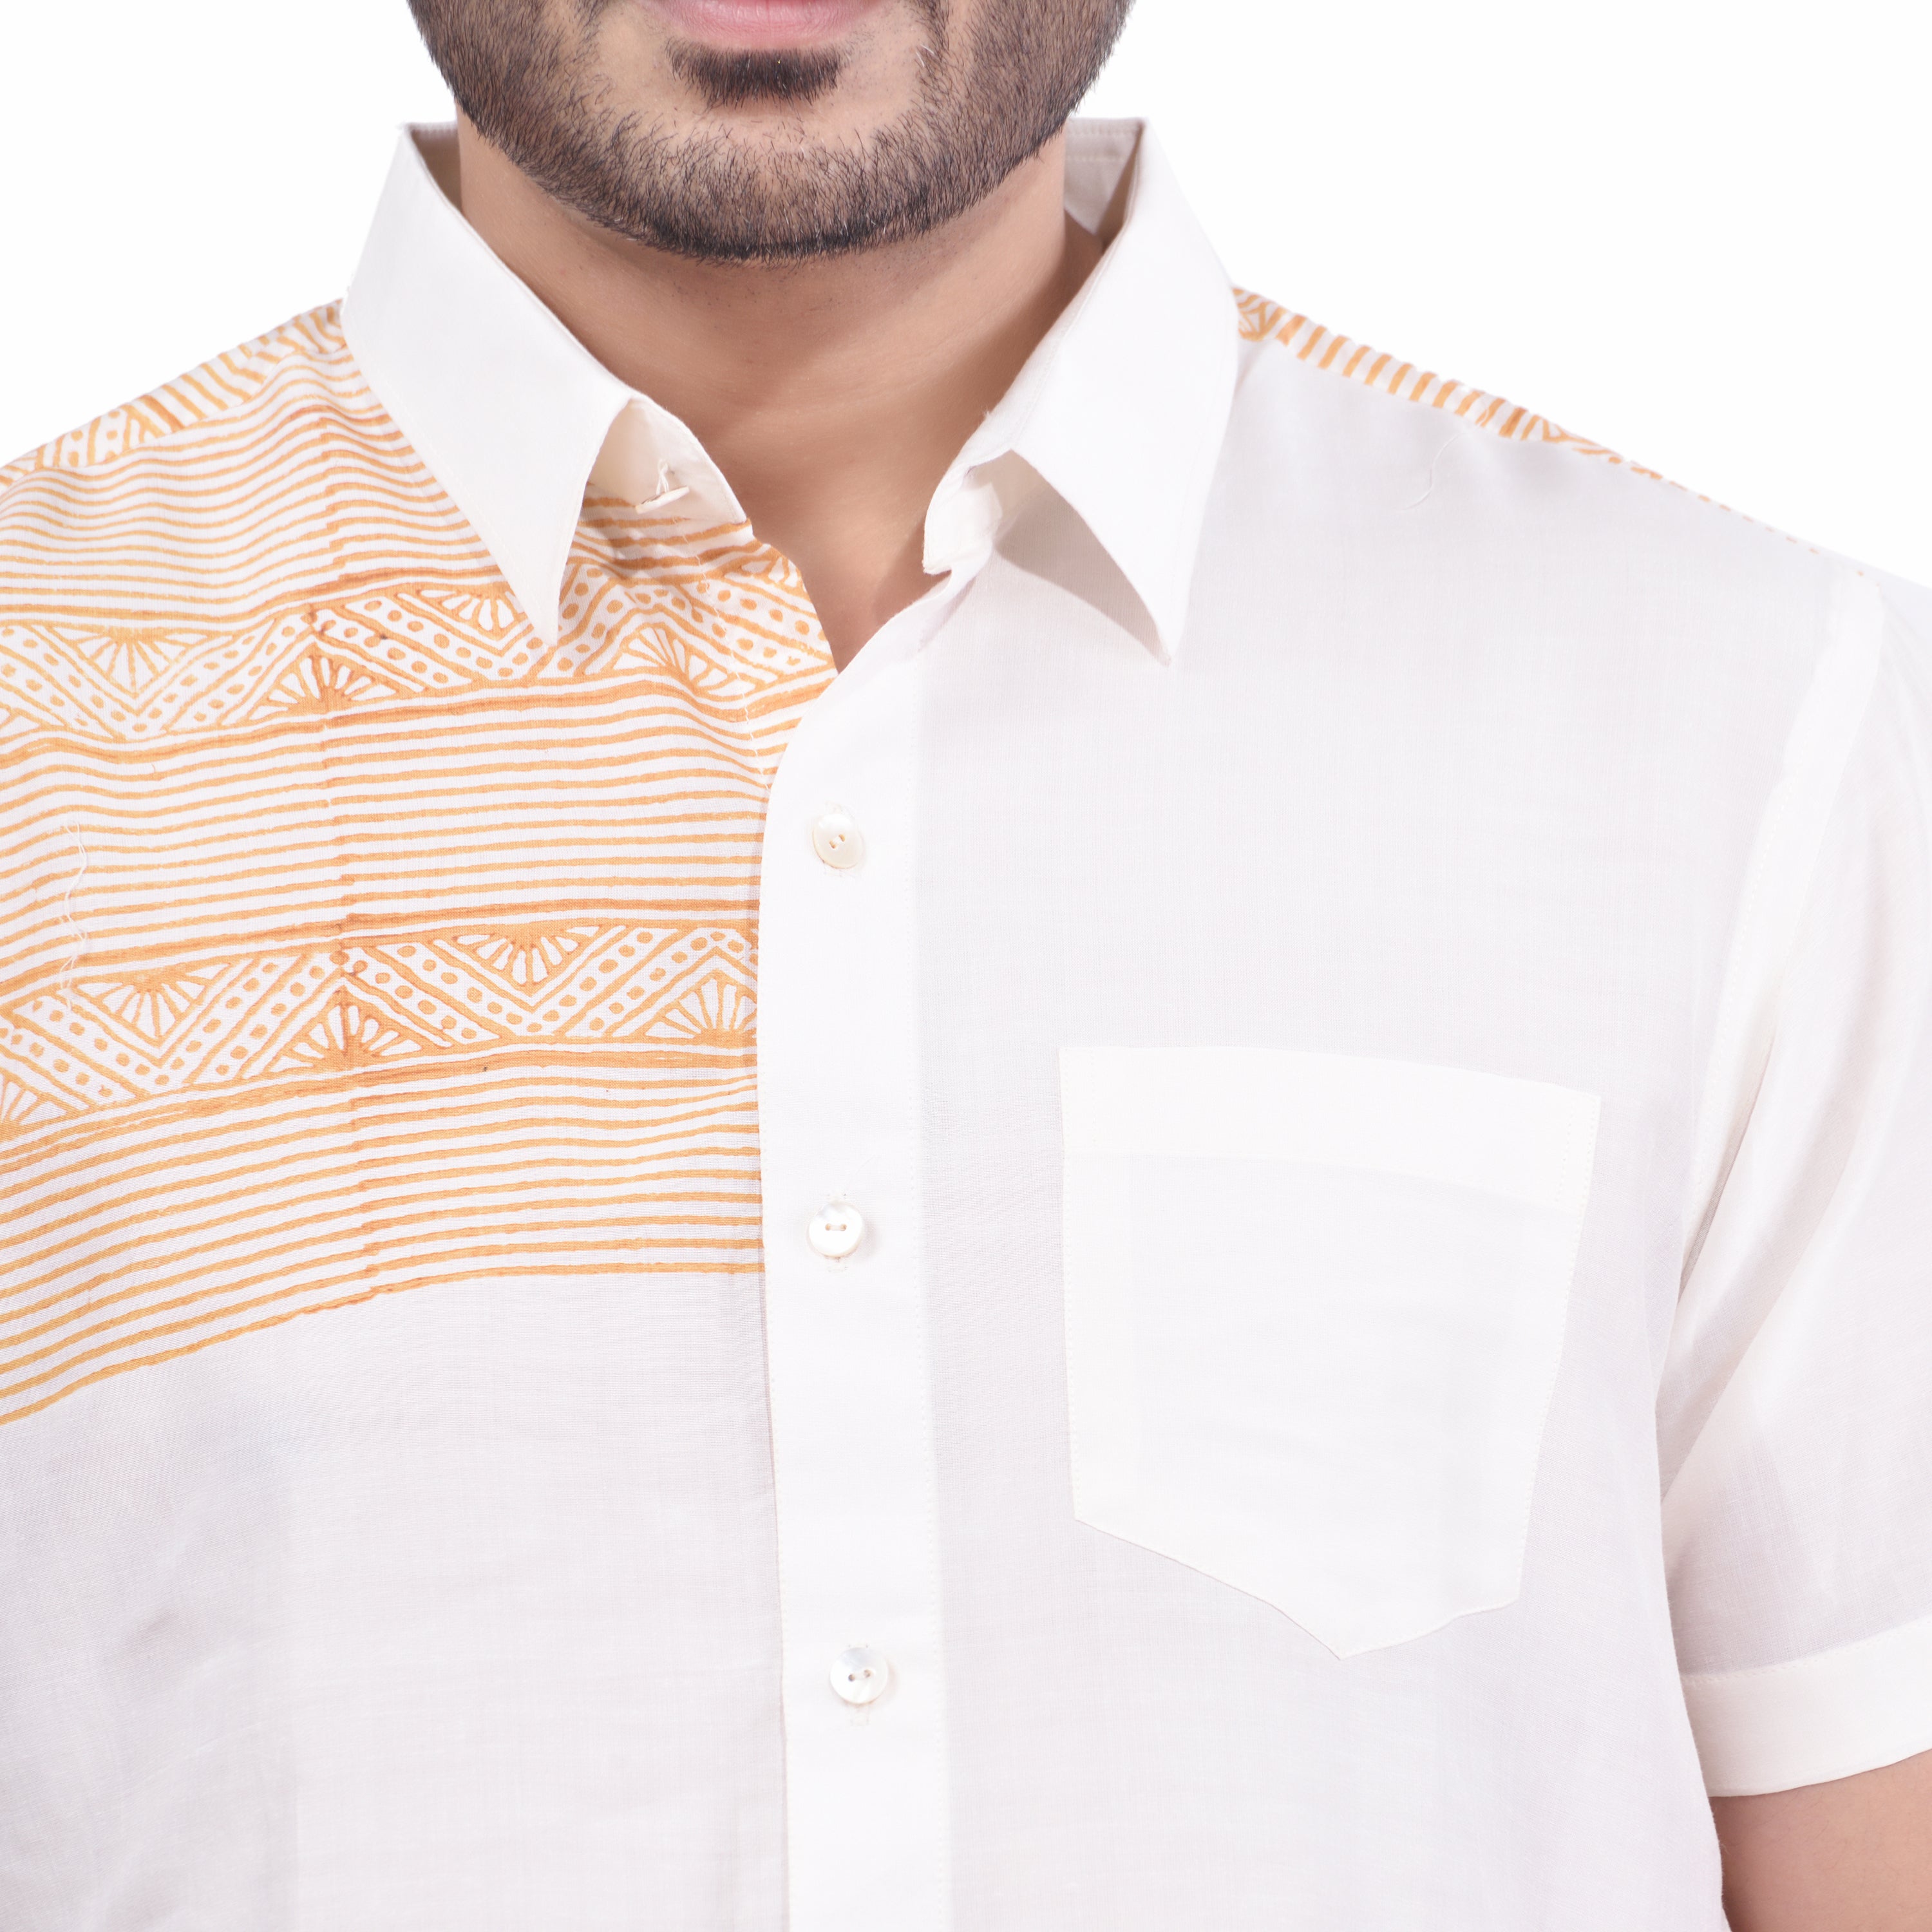 Nakshi White Tussar Cotton Hand Block Print Men's Half Shirt